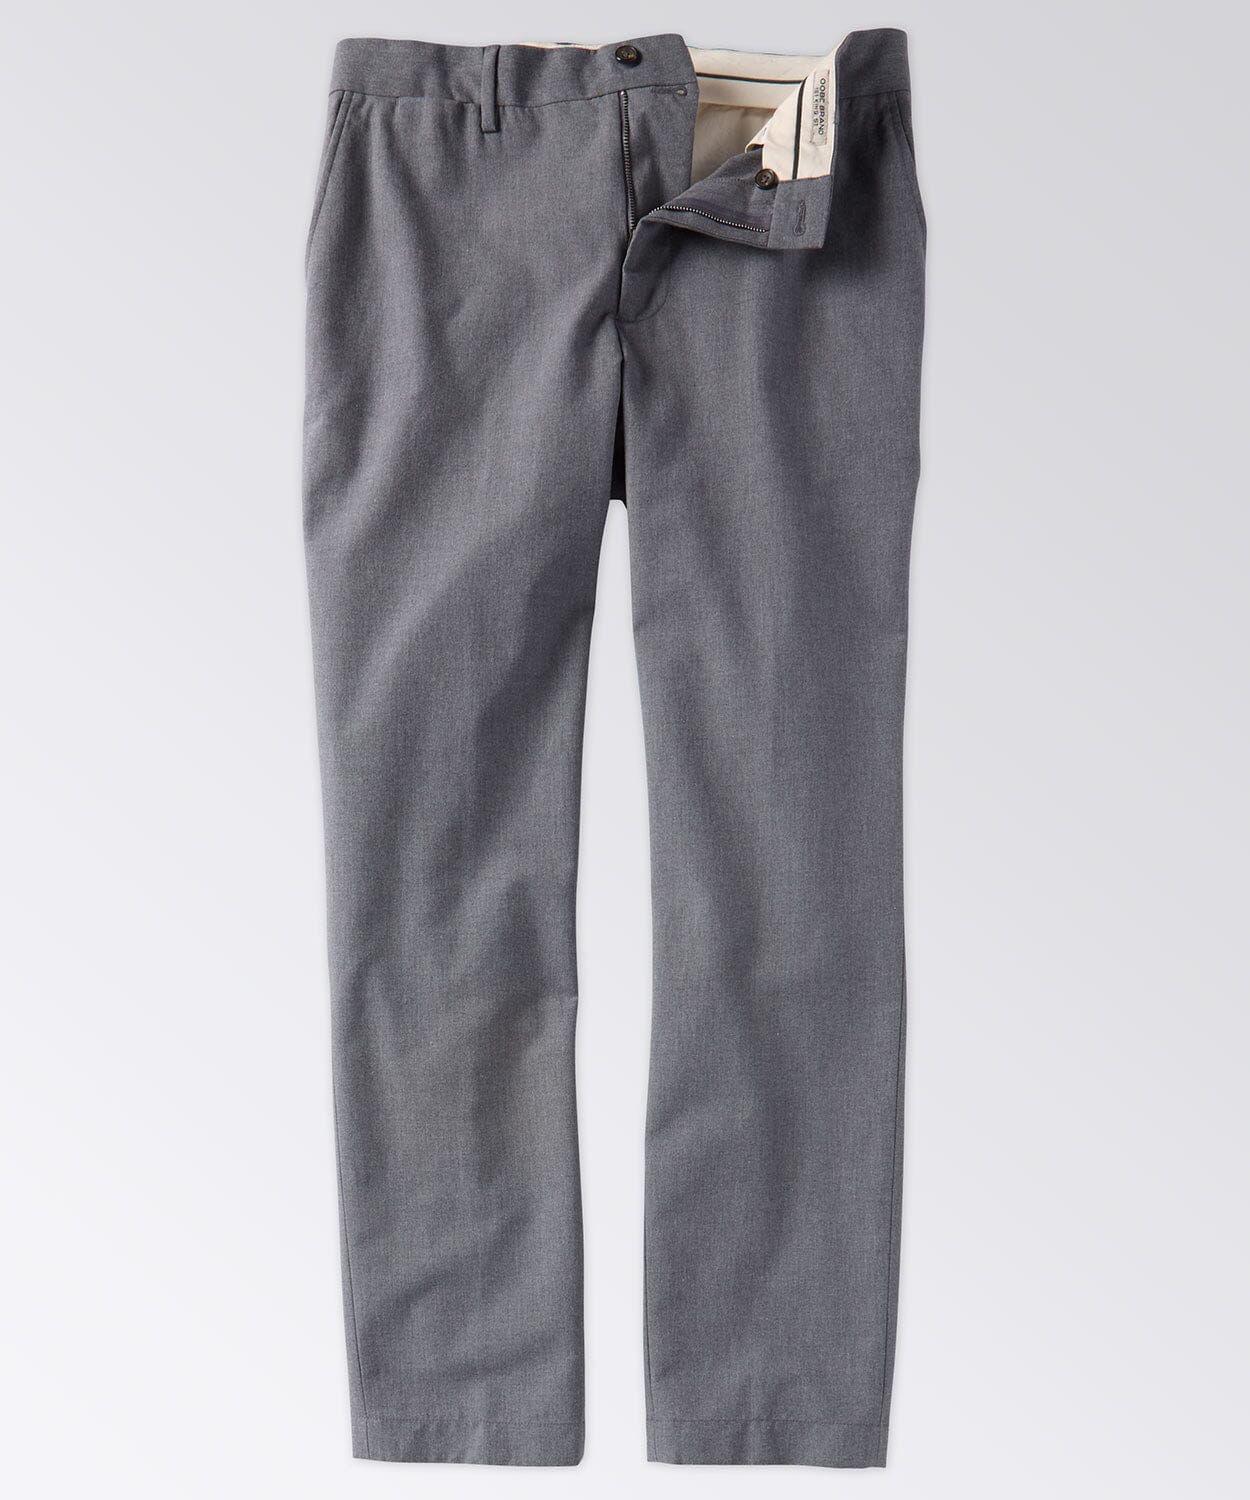 Oobe Chick-fil-A Uniform Women's Pants Slacks Size 16/31 Straight Leg Gray  NWOT